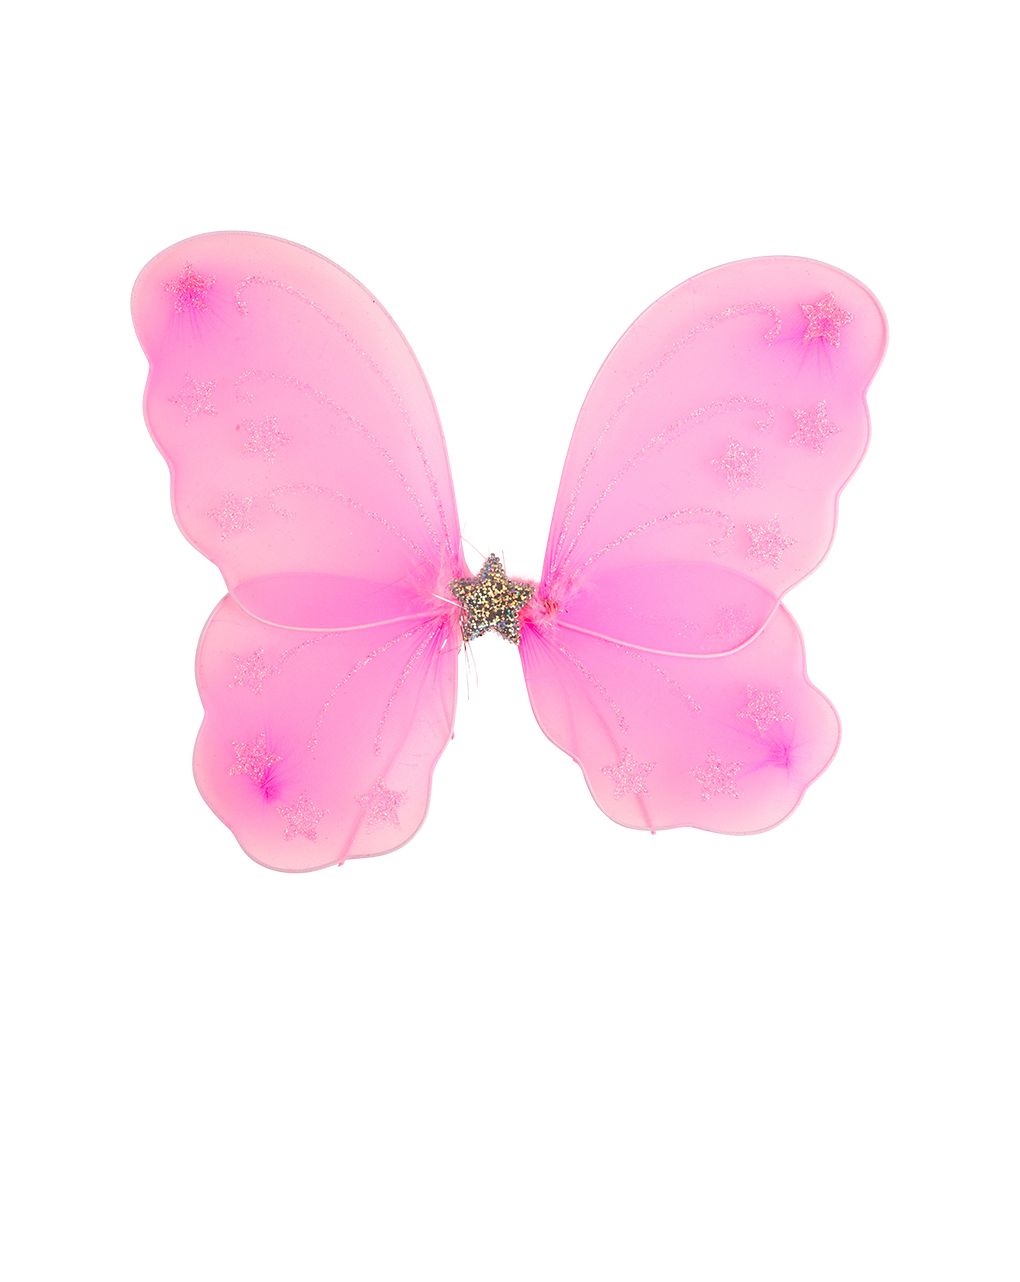 Ali farfalla rosa cm. 36.5x30 - carnival toys - Carnival Toys